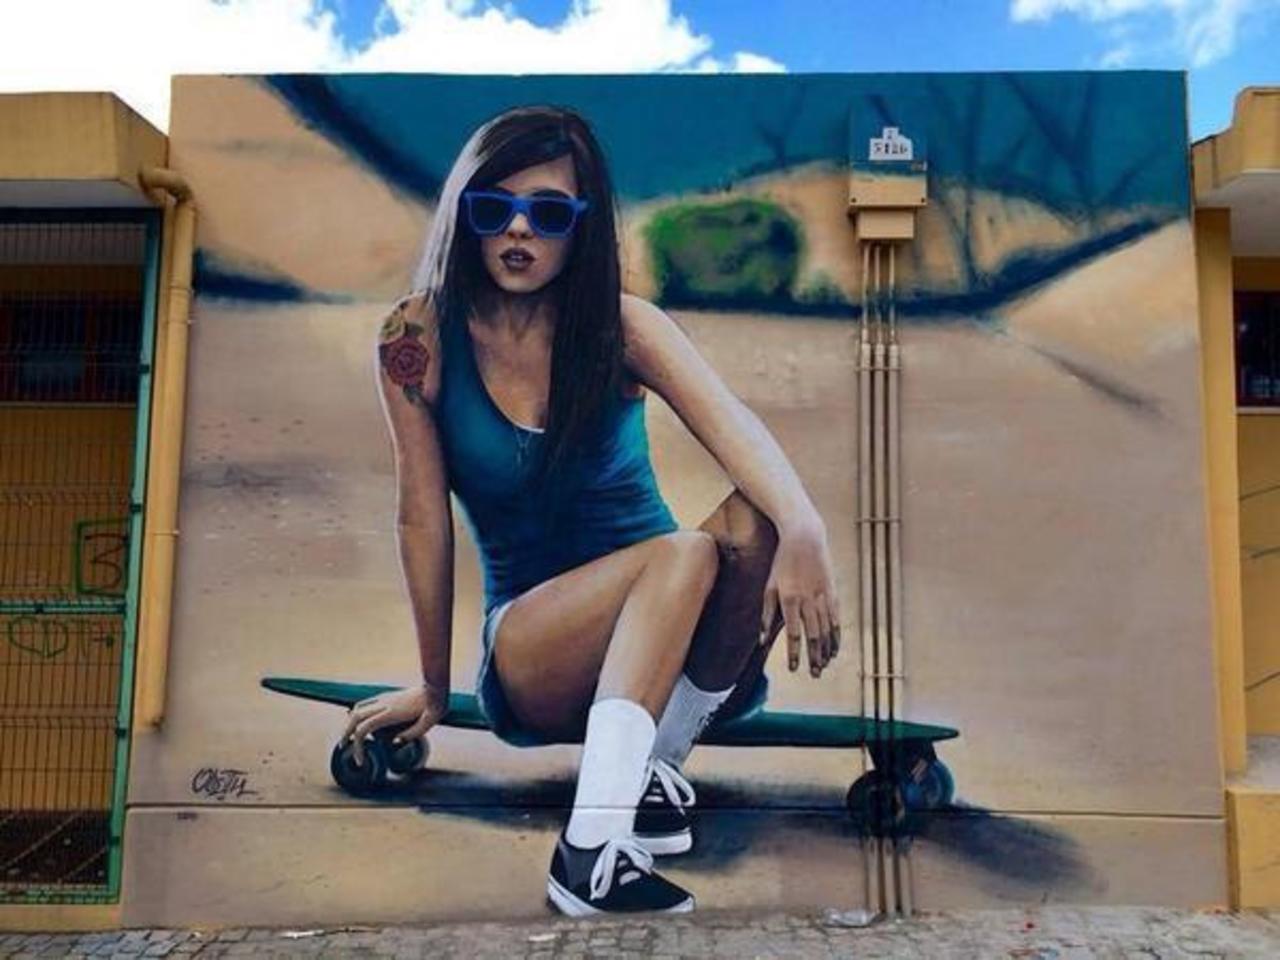 RT @richardbanfa: #streetart by #odeith in #portugal #switch #bedifferent #graffiti #arte #art http://t.co/SmzsKVUcDy